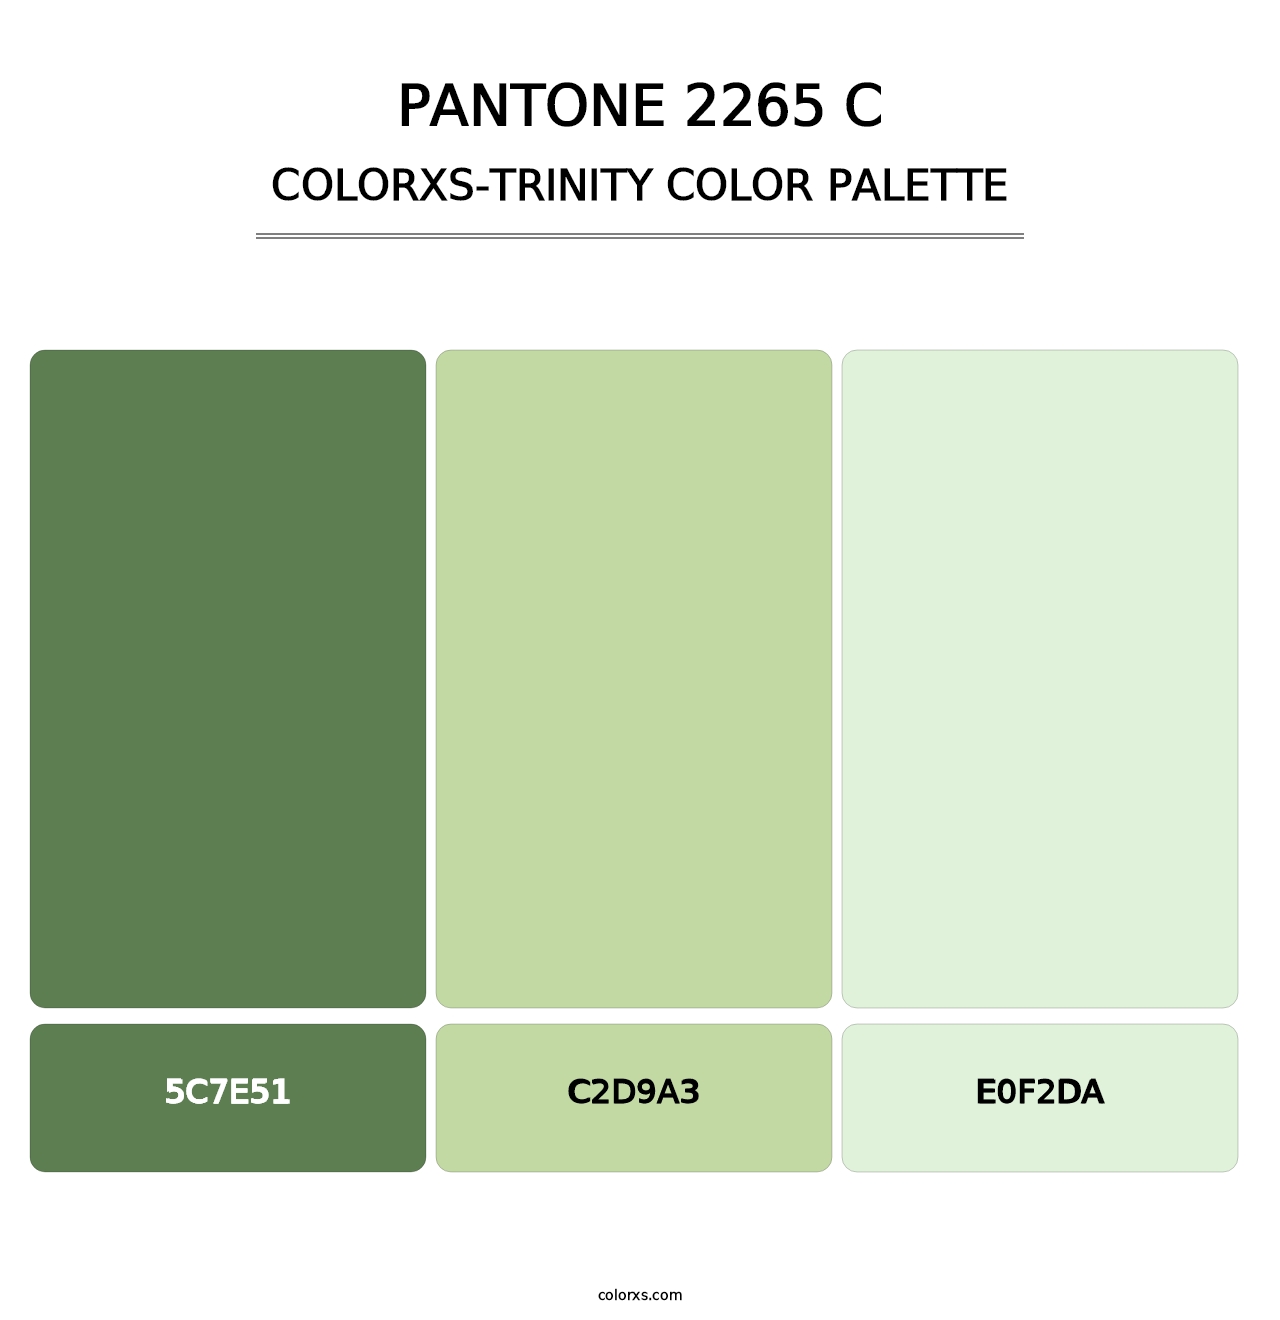 PANTONE 2265 C - Colorxs Trinity Palette